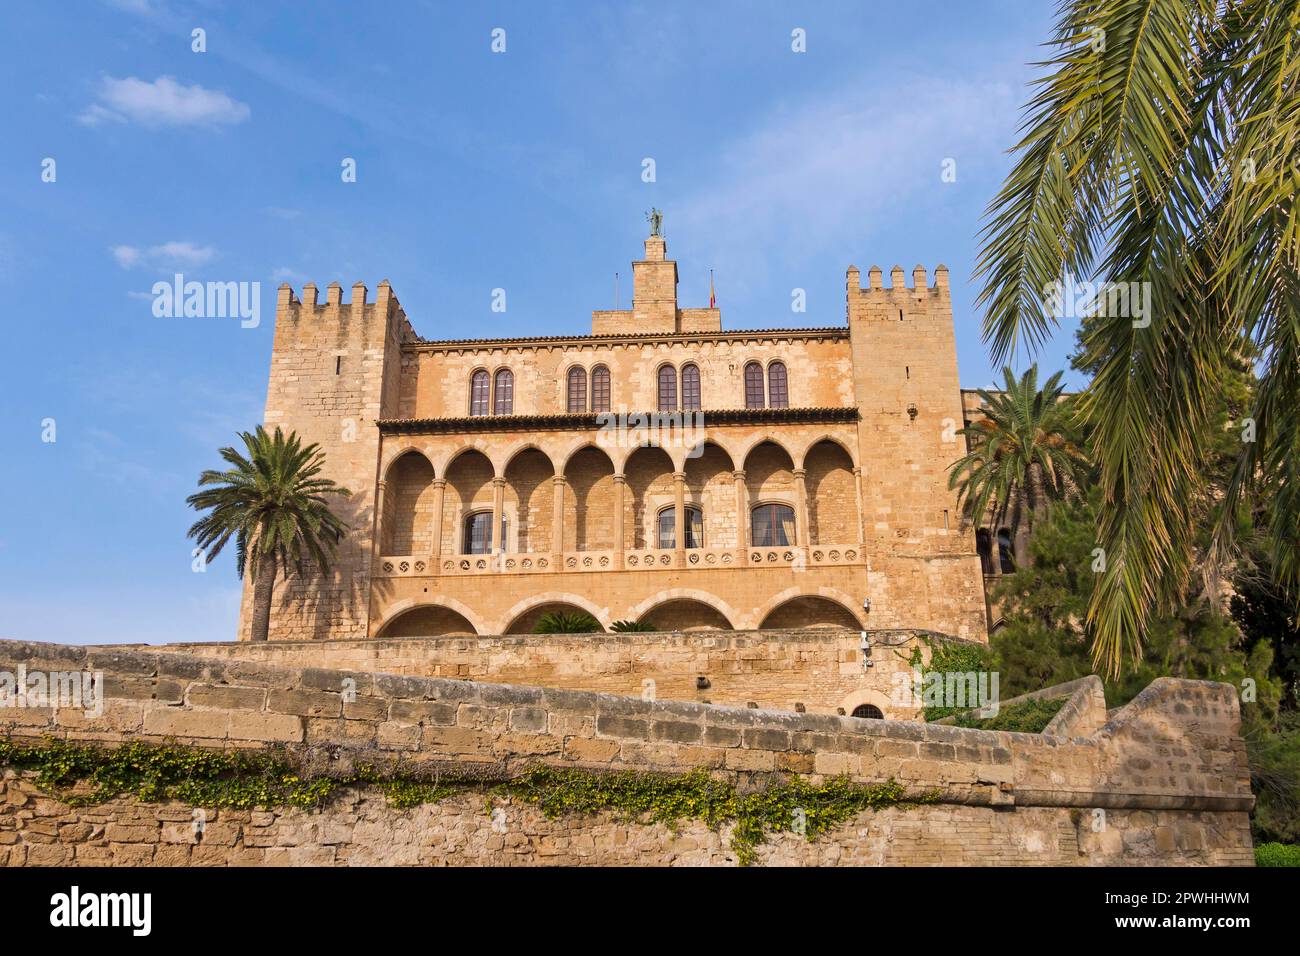 Koenigspalast, Palau Reial de lAlmudaina, Palma, Mallorca, Balearen, Spanien Stockfoto